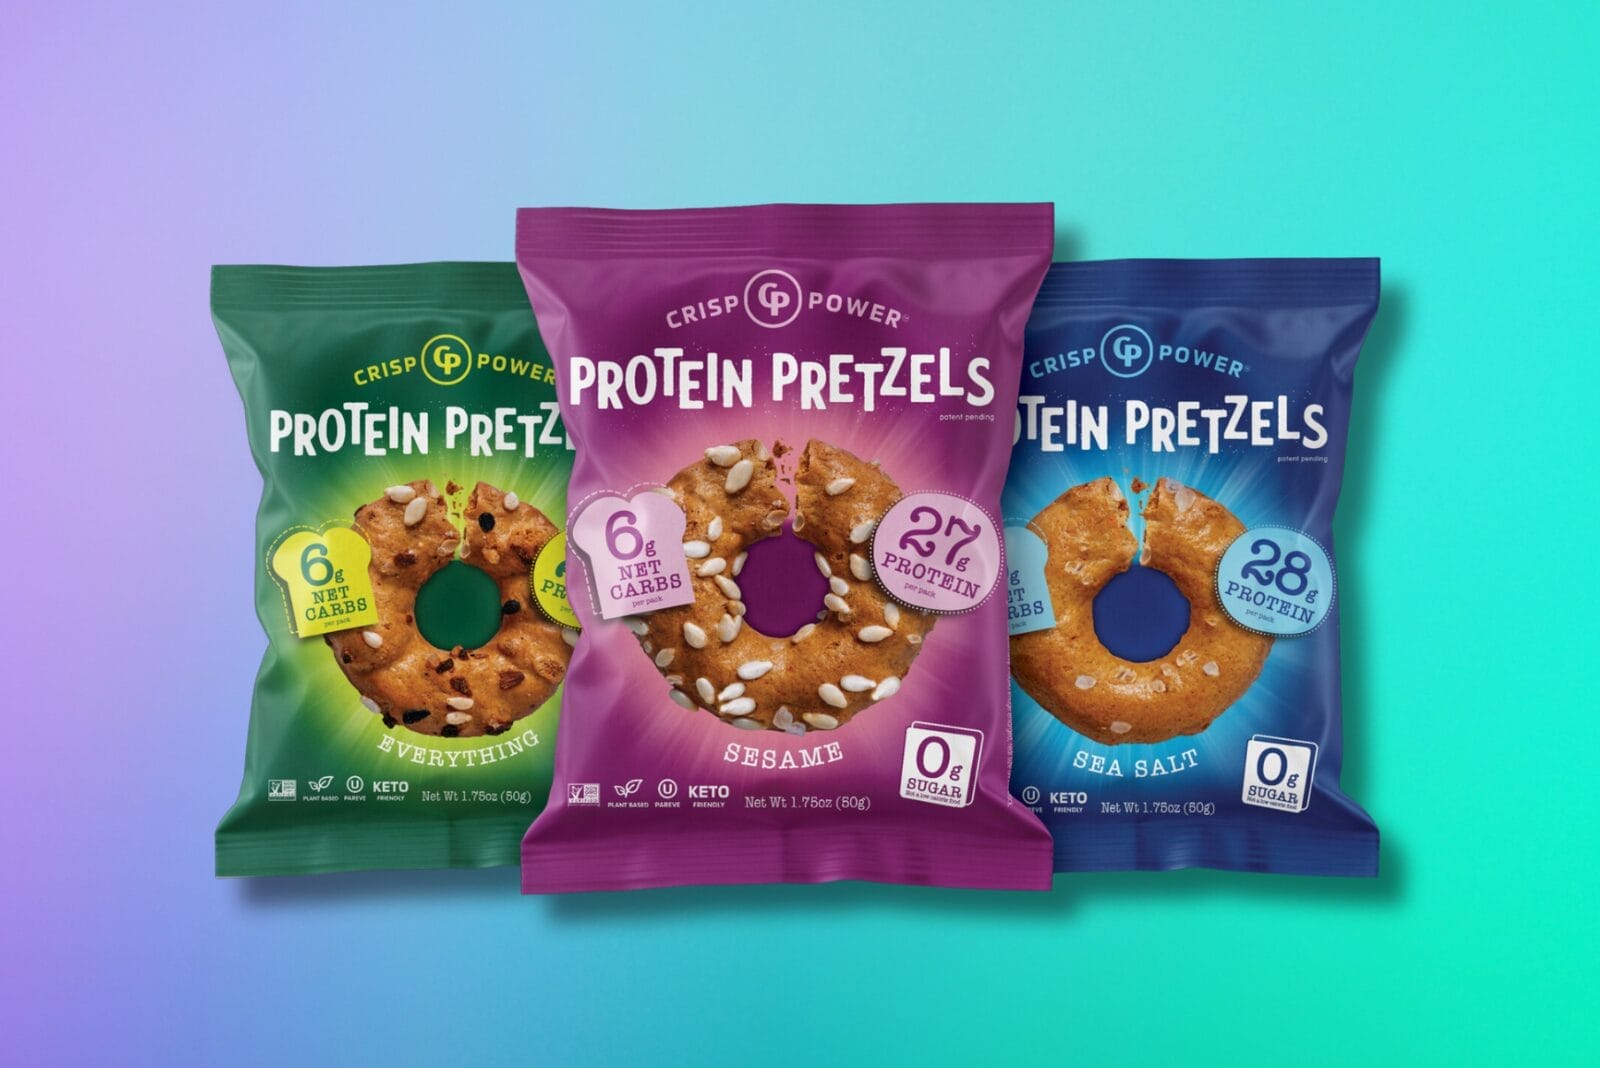 Crisp power protein pretzels in everything, sesame, and sea salt flavors